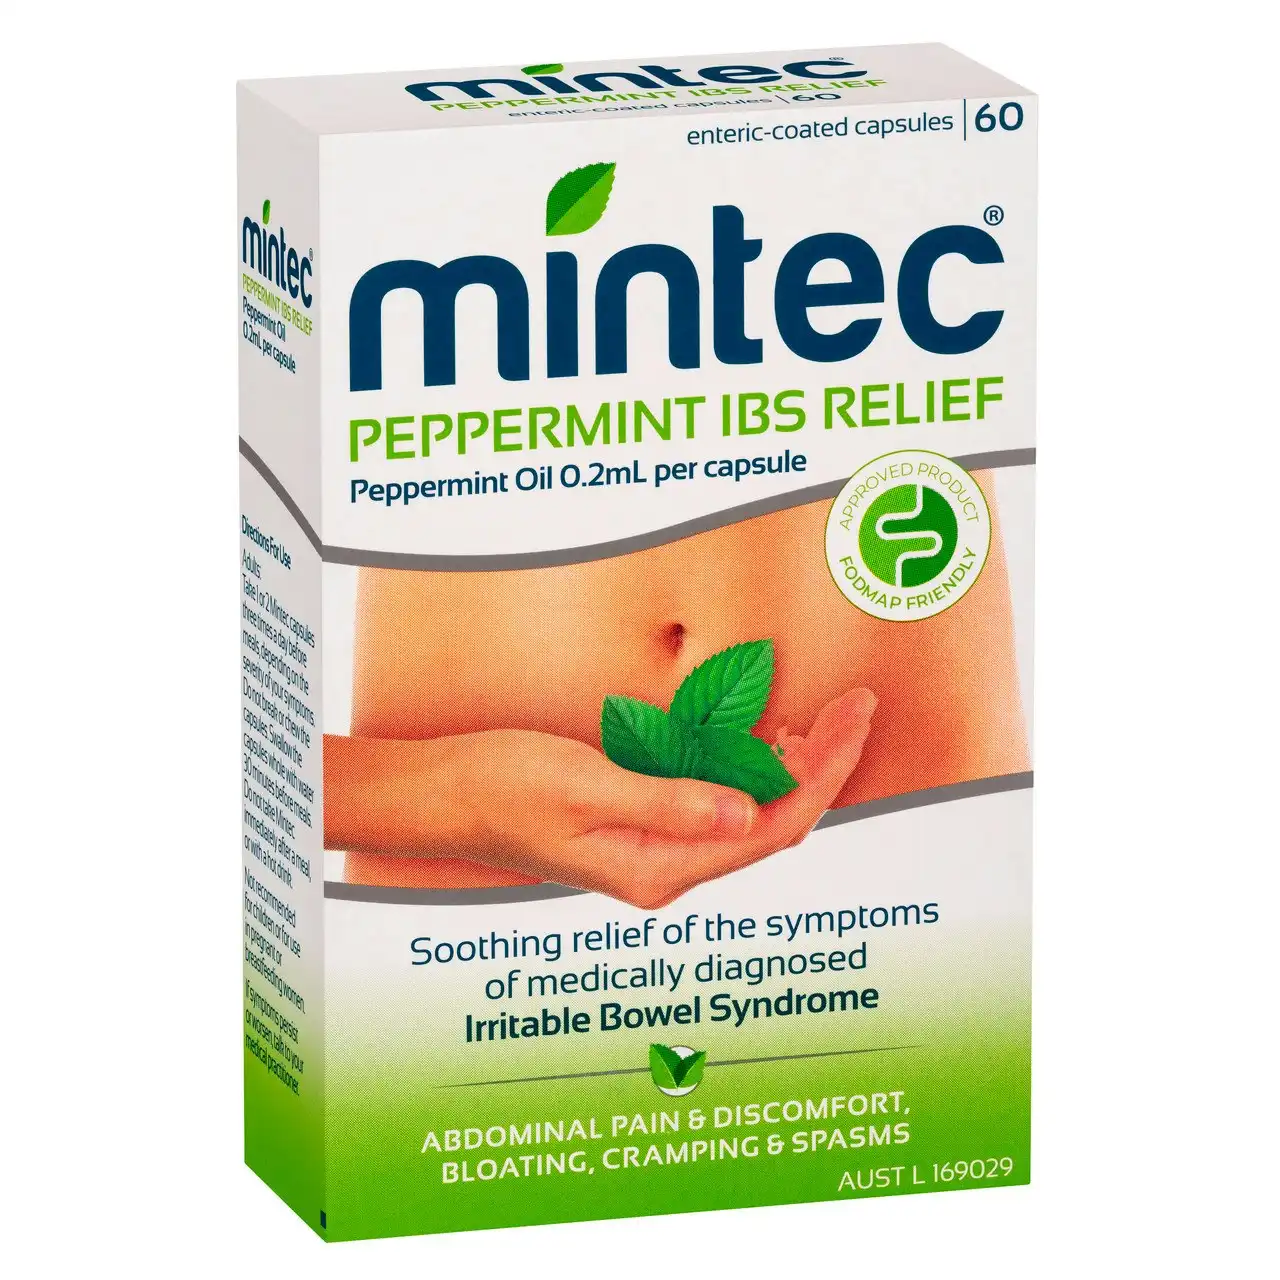 Mintec Peppermint IBS Relief 60's Capsules